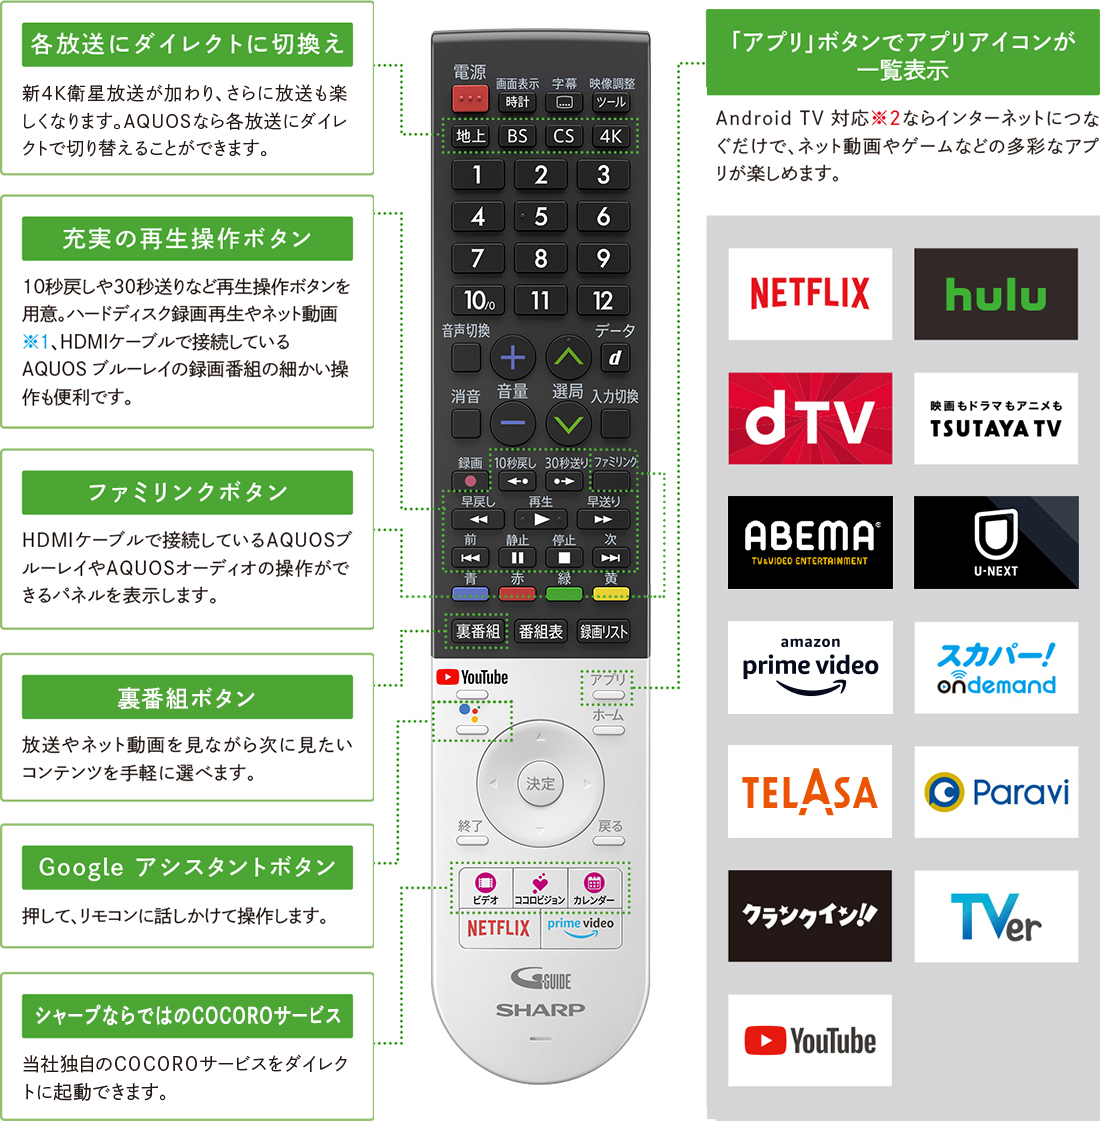 Android TVモデル専用リモコン(音声検索機能付)